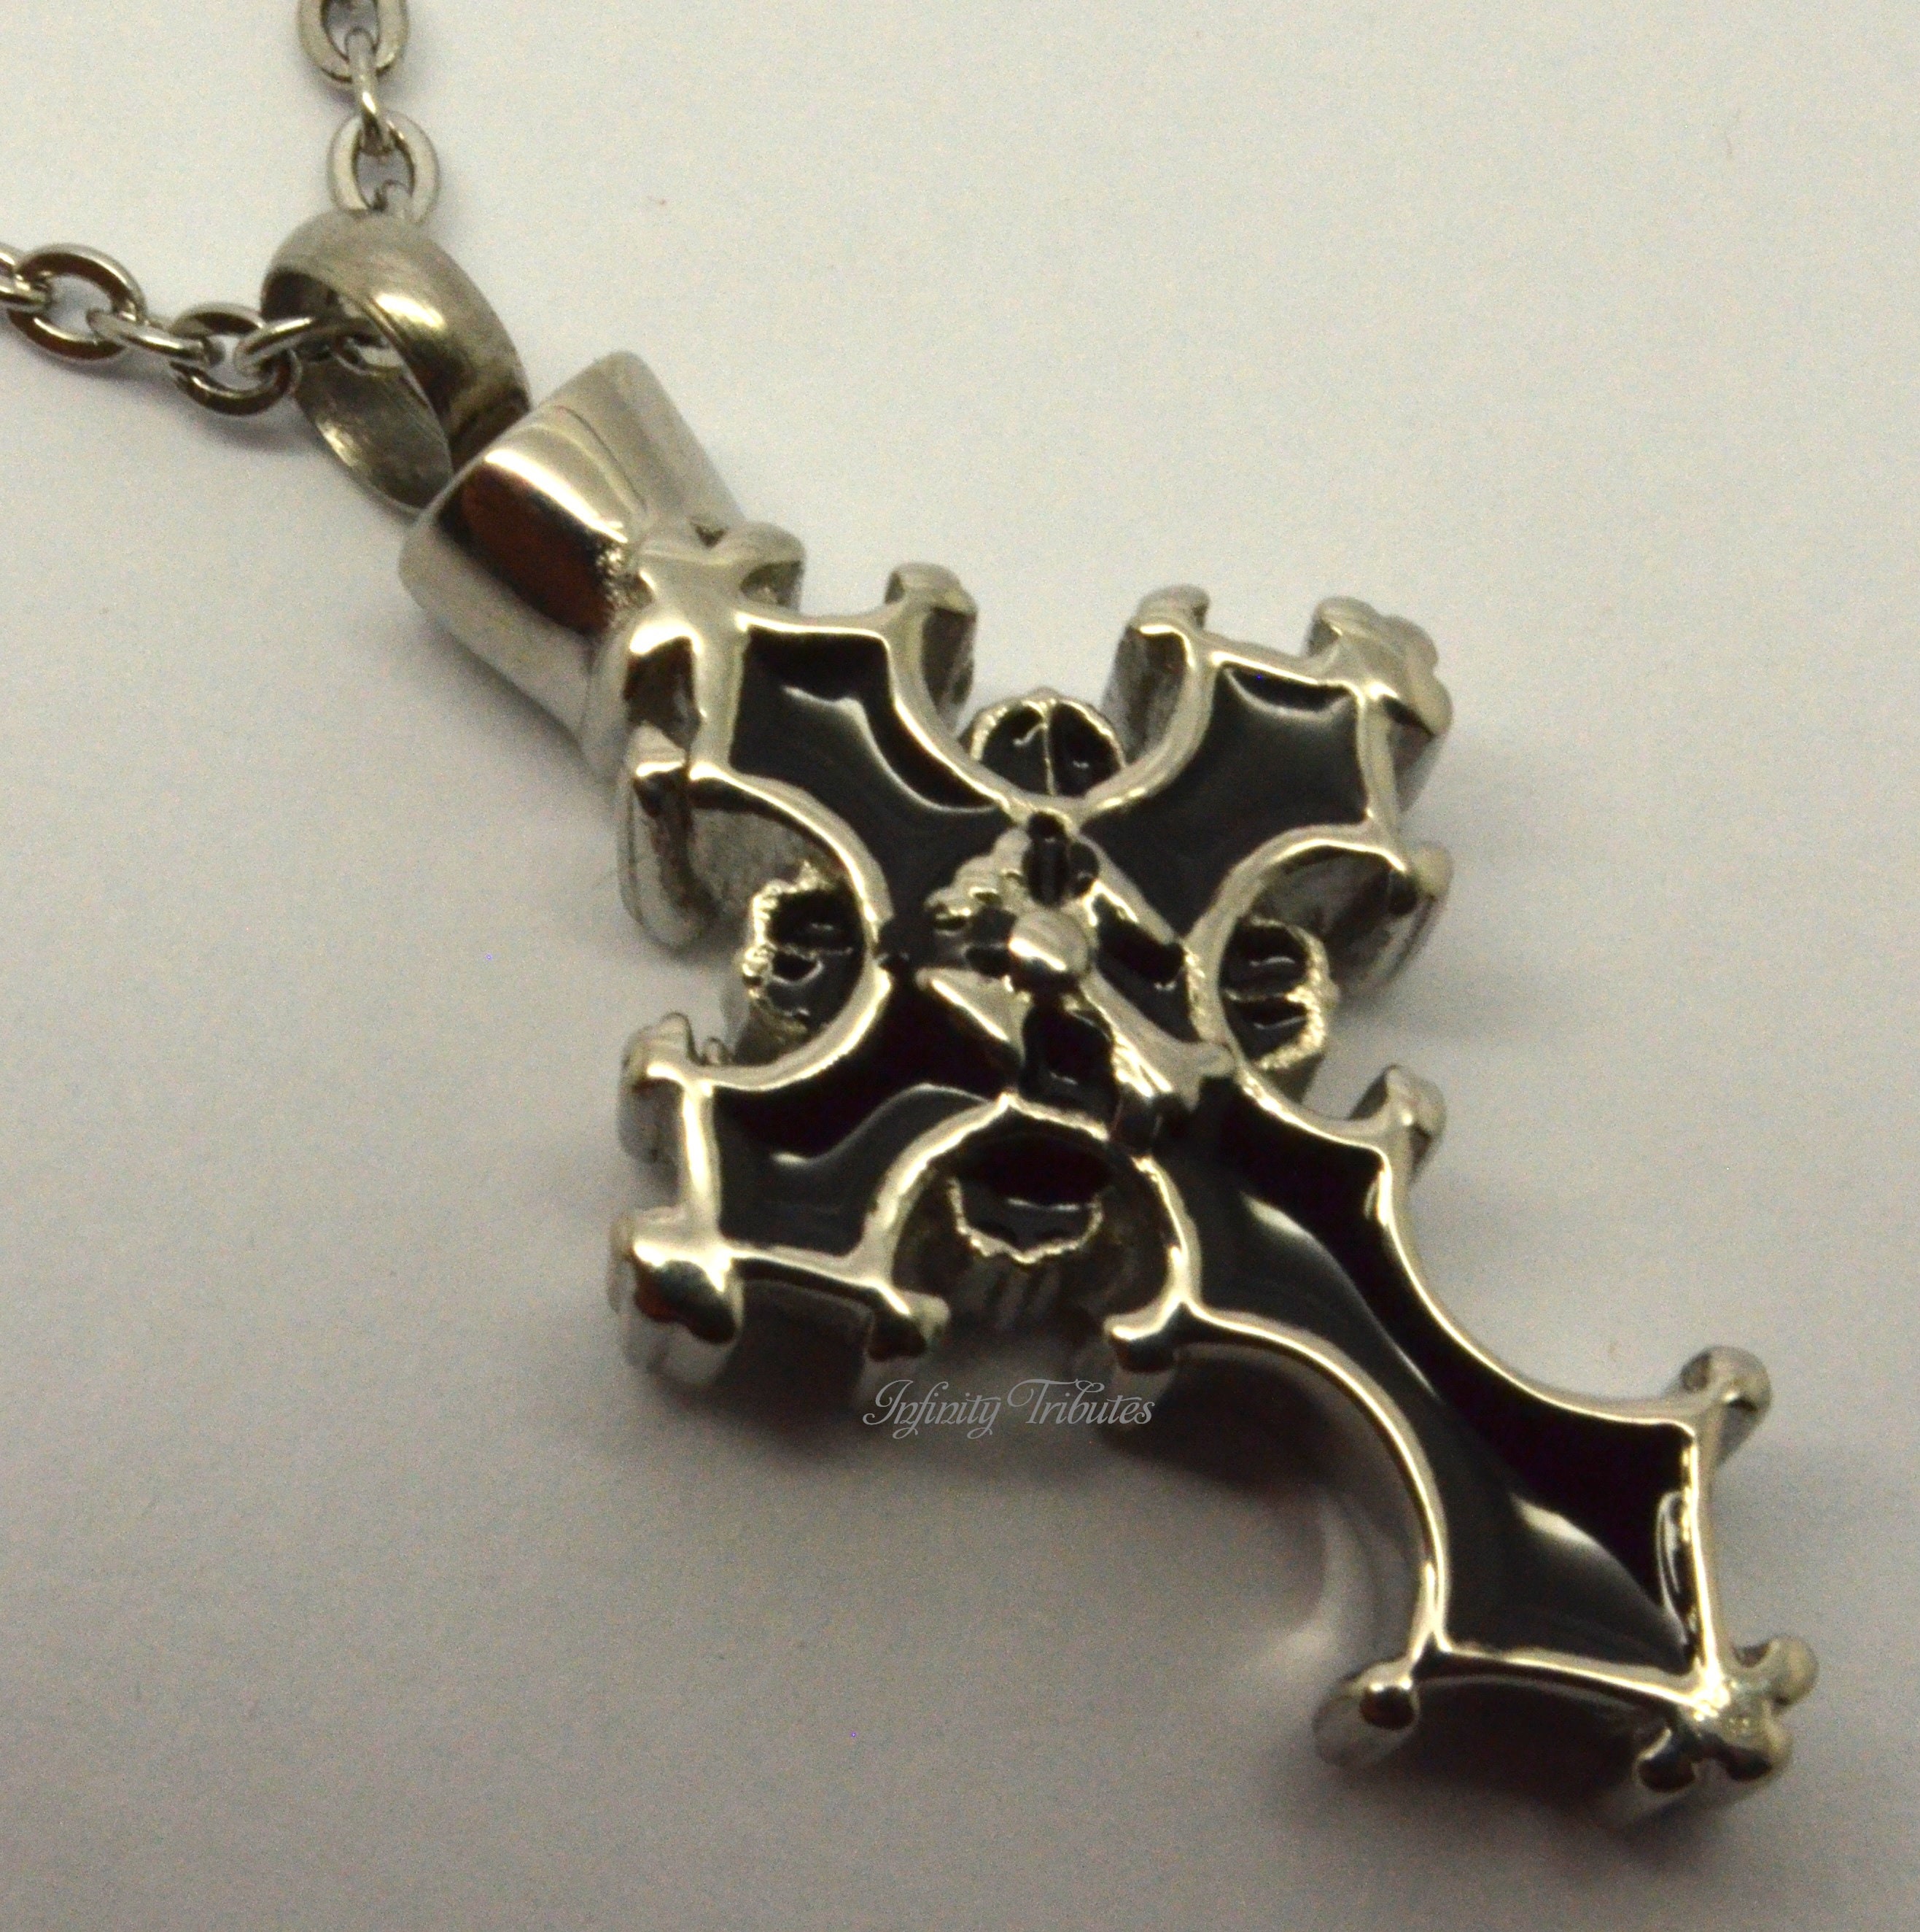 Stash Necklace - Cruel Intentions Inspired Cross